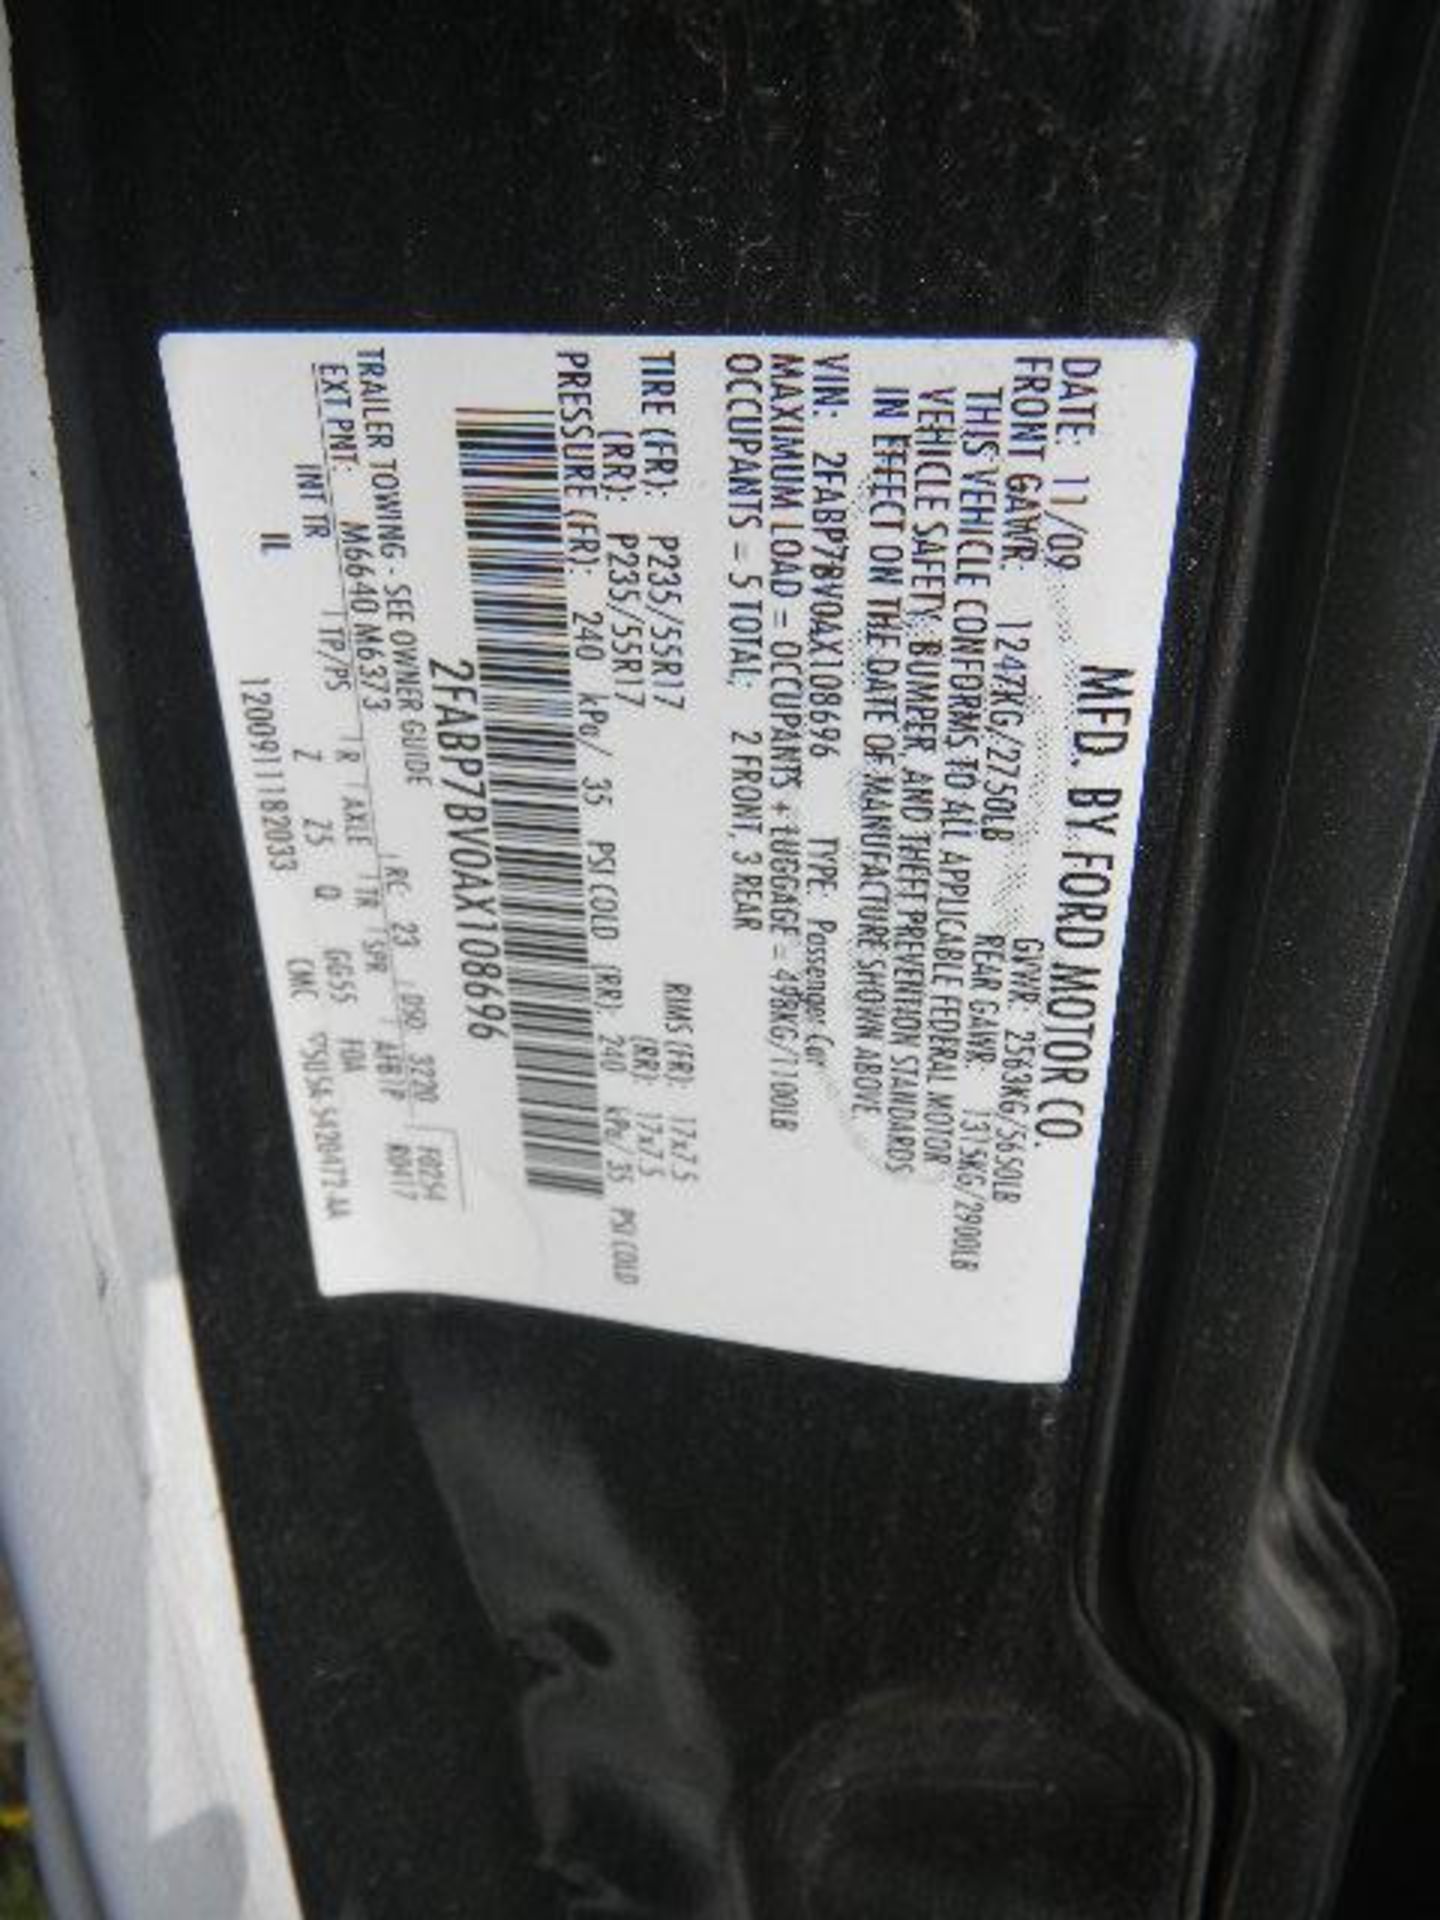 2010 Ford Crown Vic B/W Patrol Car - Asset I.D. #610 - Last of Vin (X108696) - Image 7 of 8